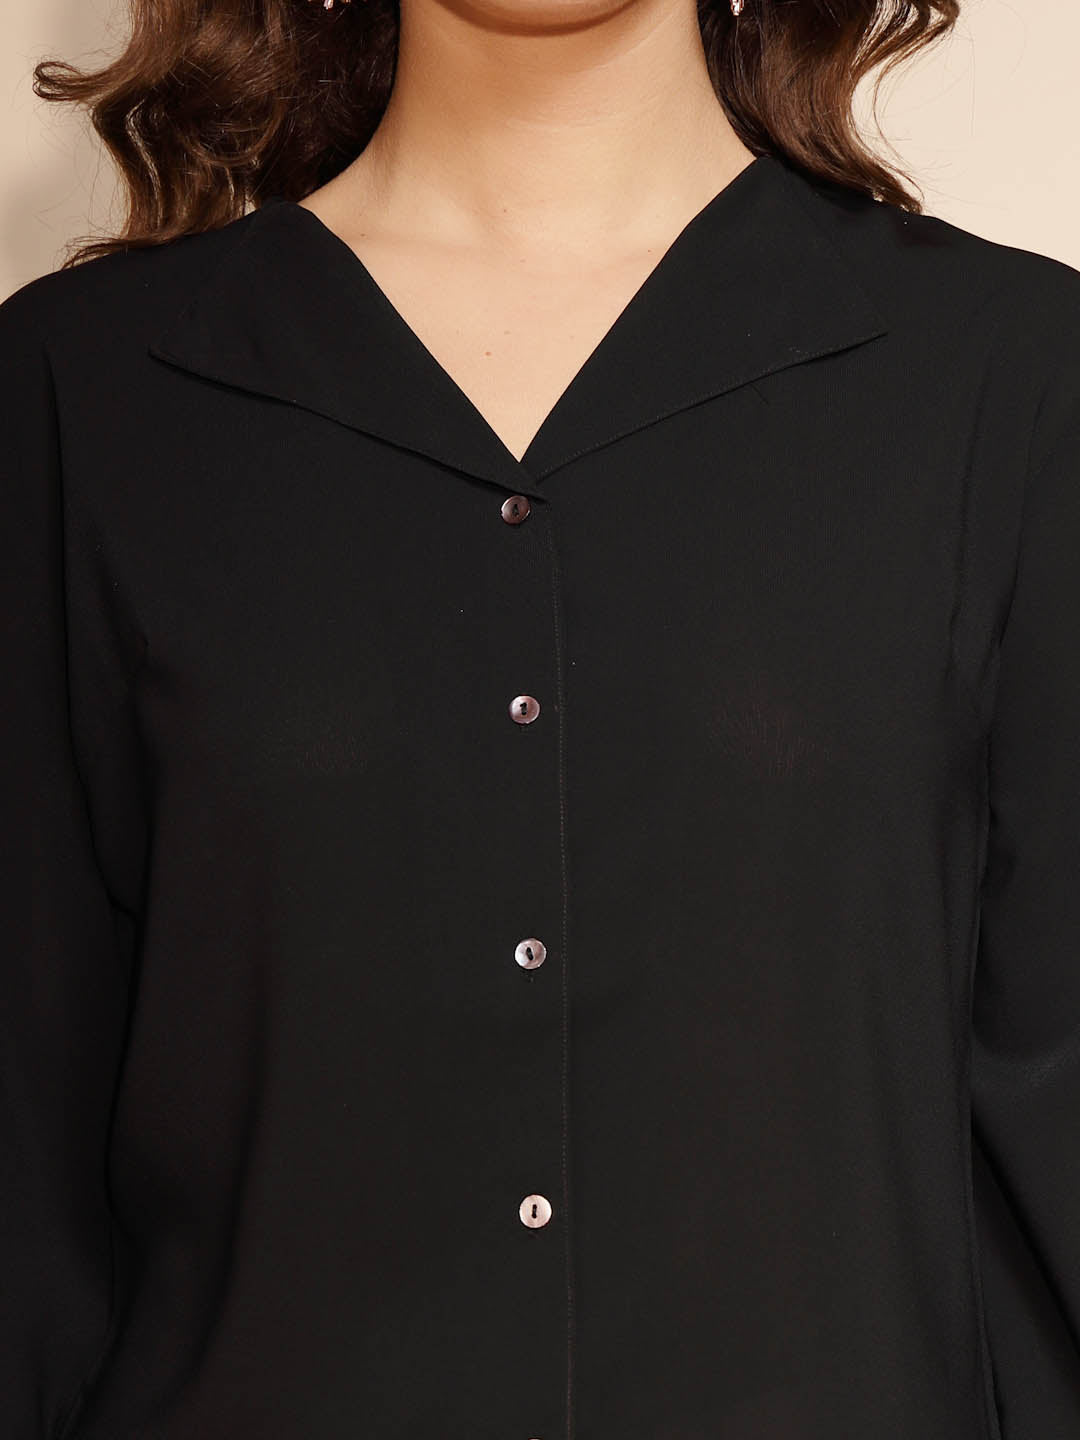 Black Collar Neck Cotton Plain Shirt